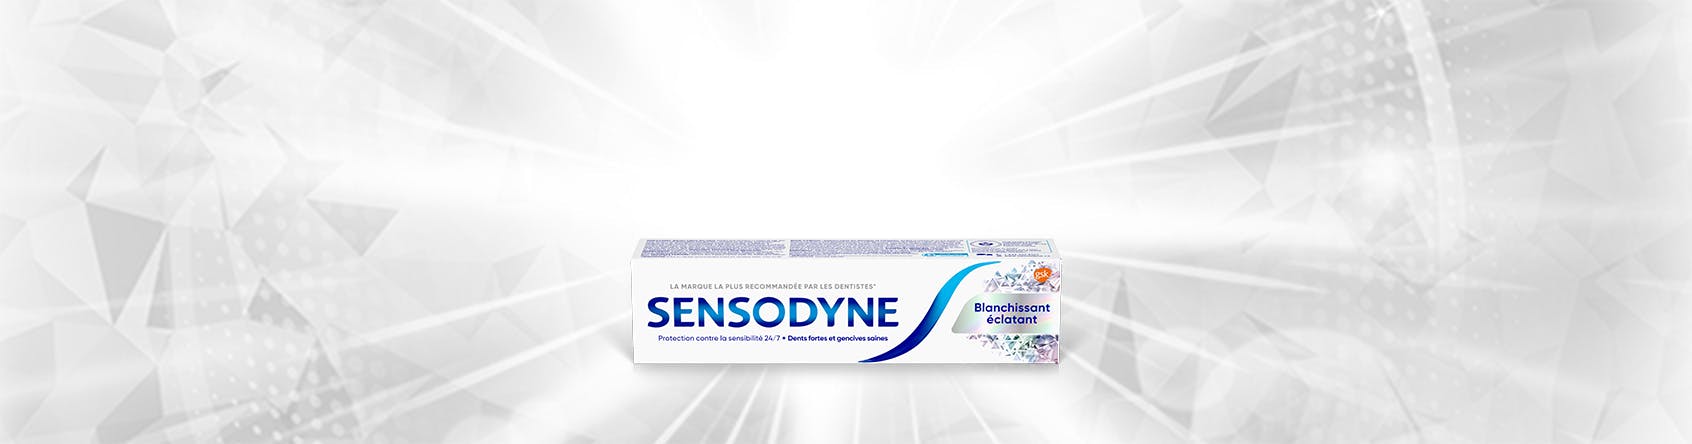 Sensodyne Brilliant Whitening campaign banner